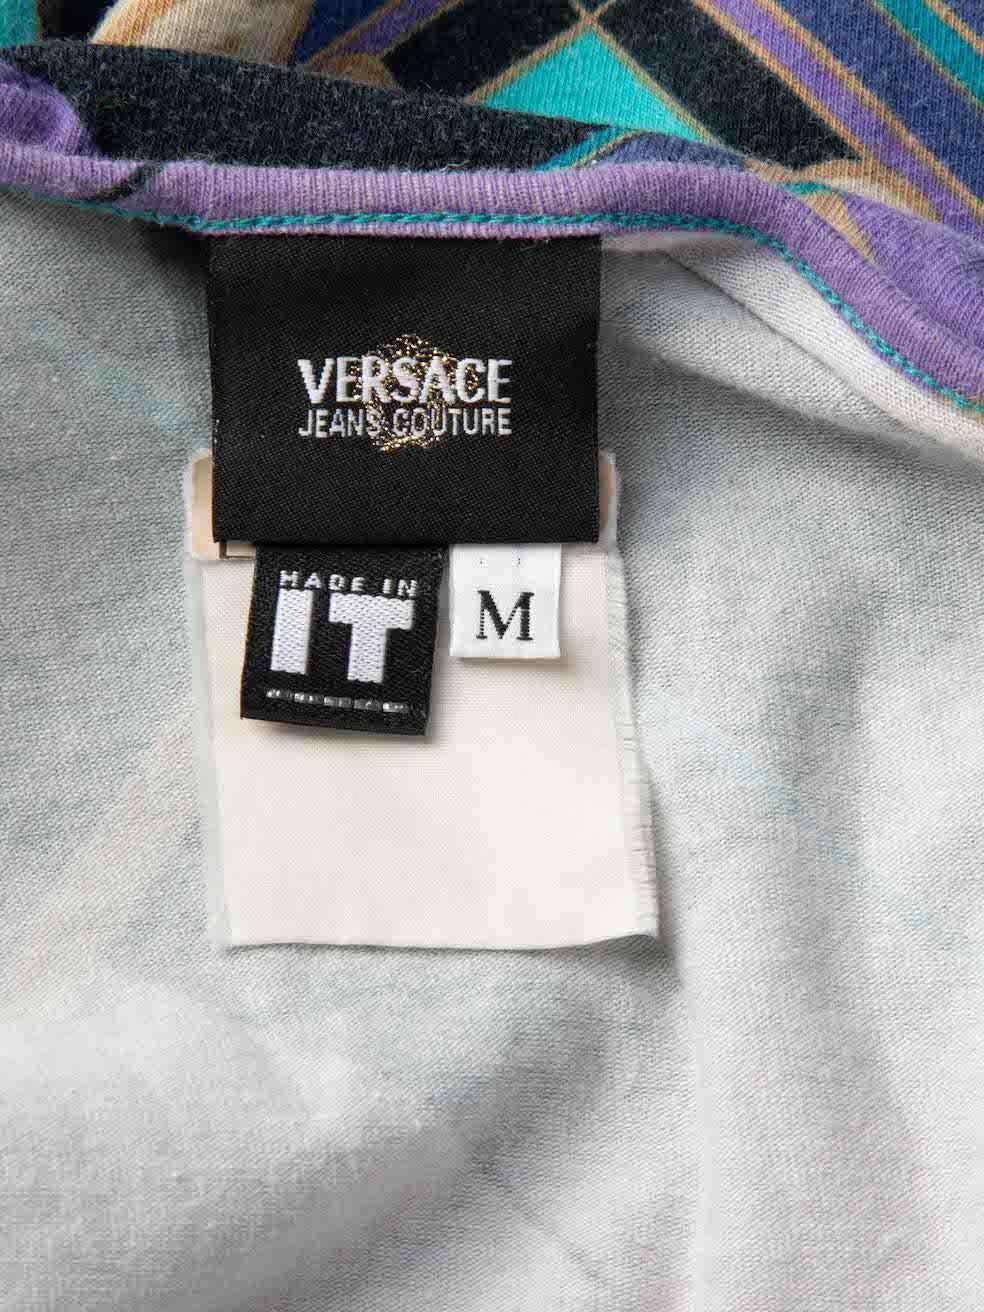 Versace Versace Jeans Couture Gedrucktes Muster Mid-Sleeve Top Größe M Damen im Angebot